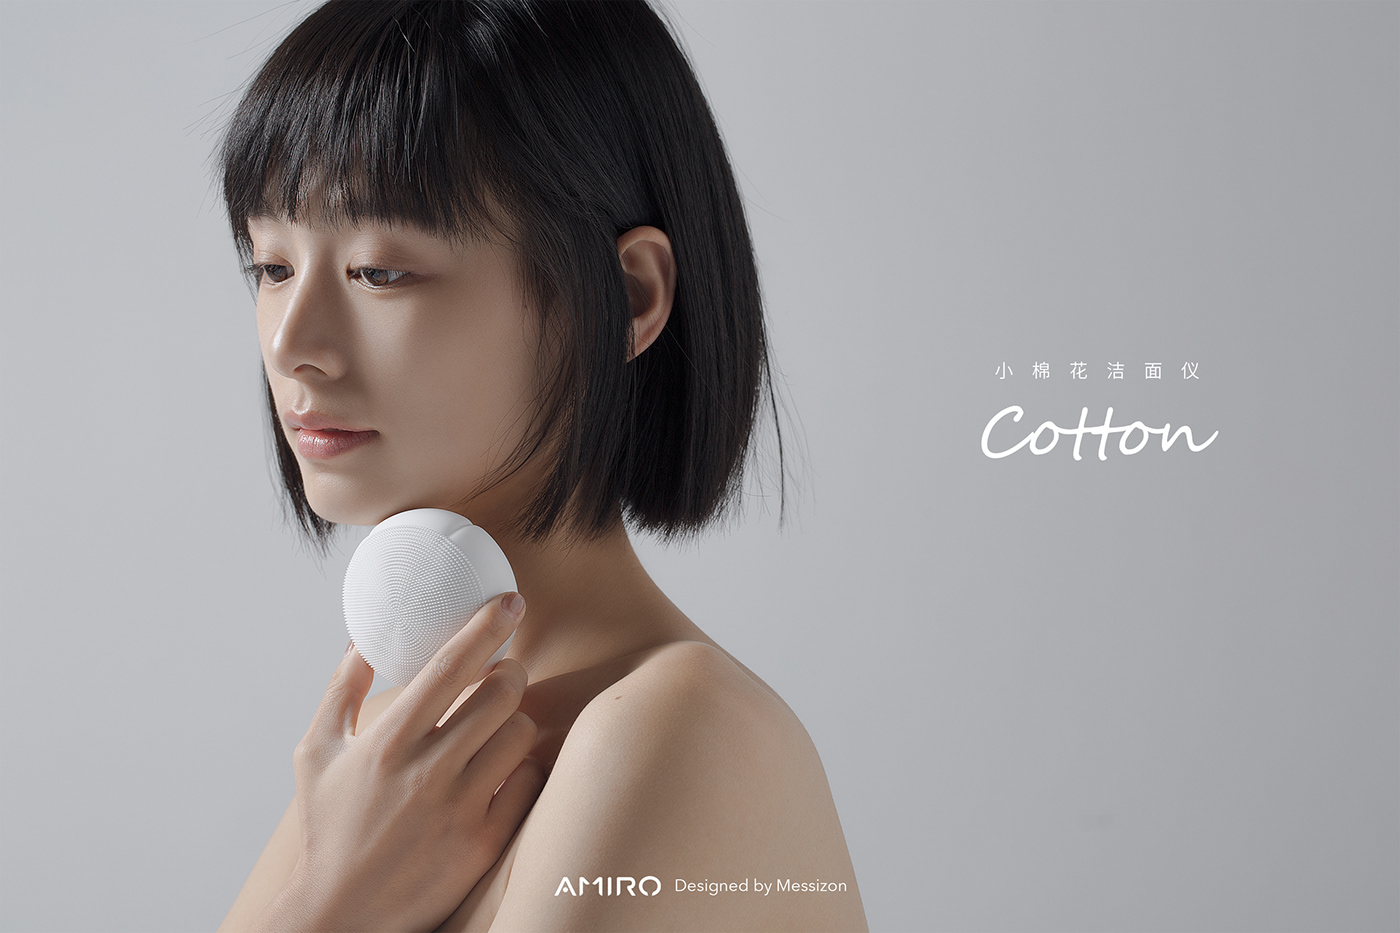 beauty product women cleanser amiro intellect soft silicon Shenzhen cotton reddot